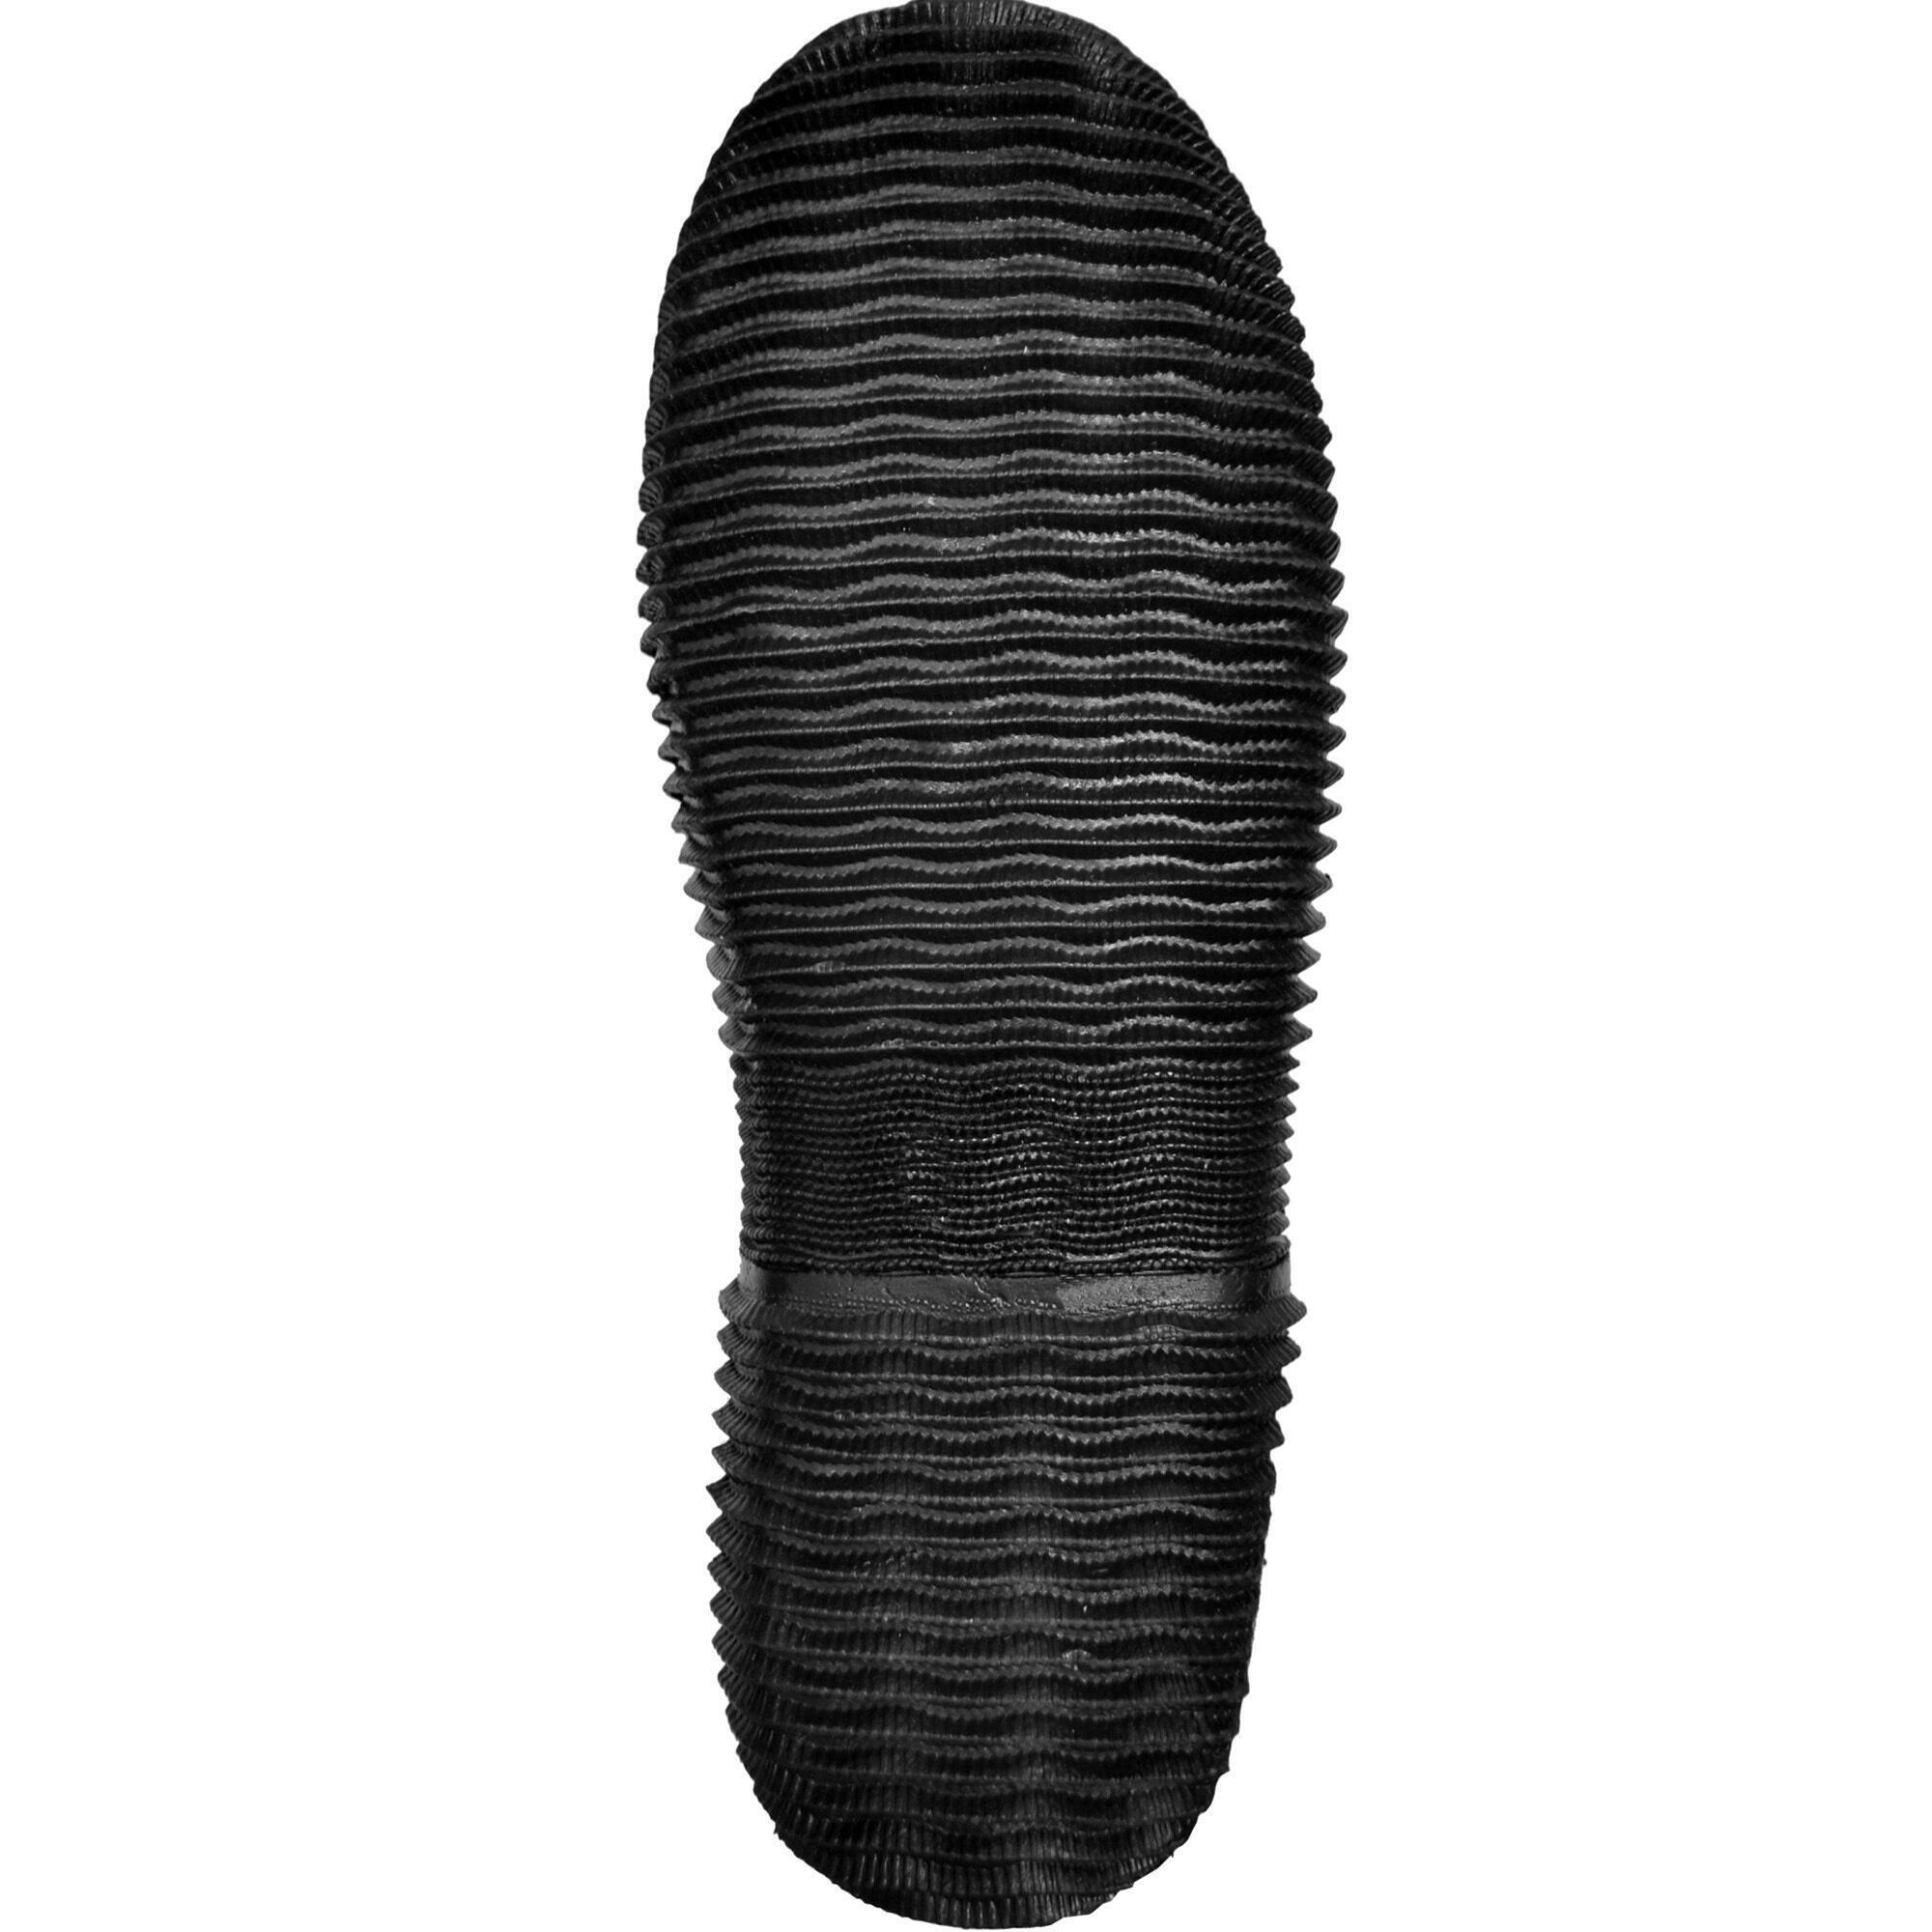 ISLA 3MM Scuba-Diving Neoprene Boots - Black